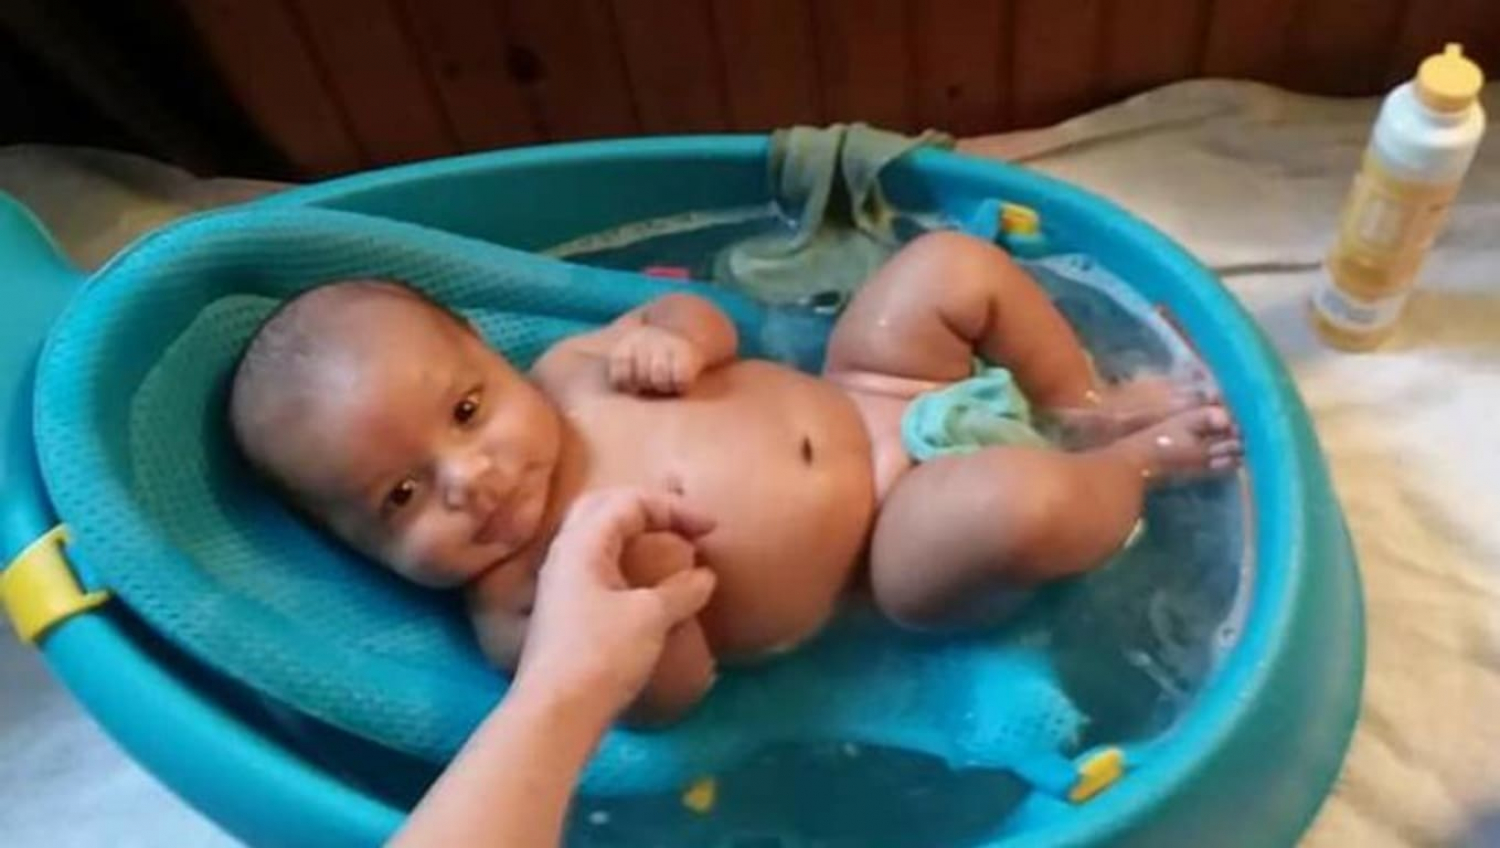 Skip Hop Baby Bath Tub, 3-Stage Smart Sling Tub, Moby, Grey 